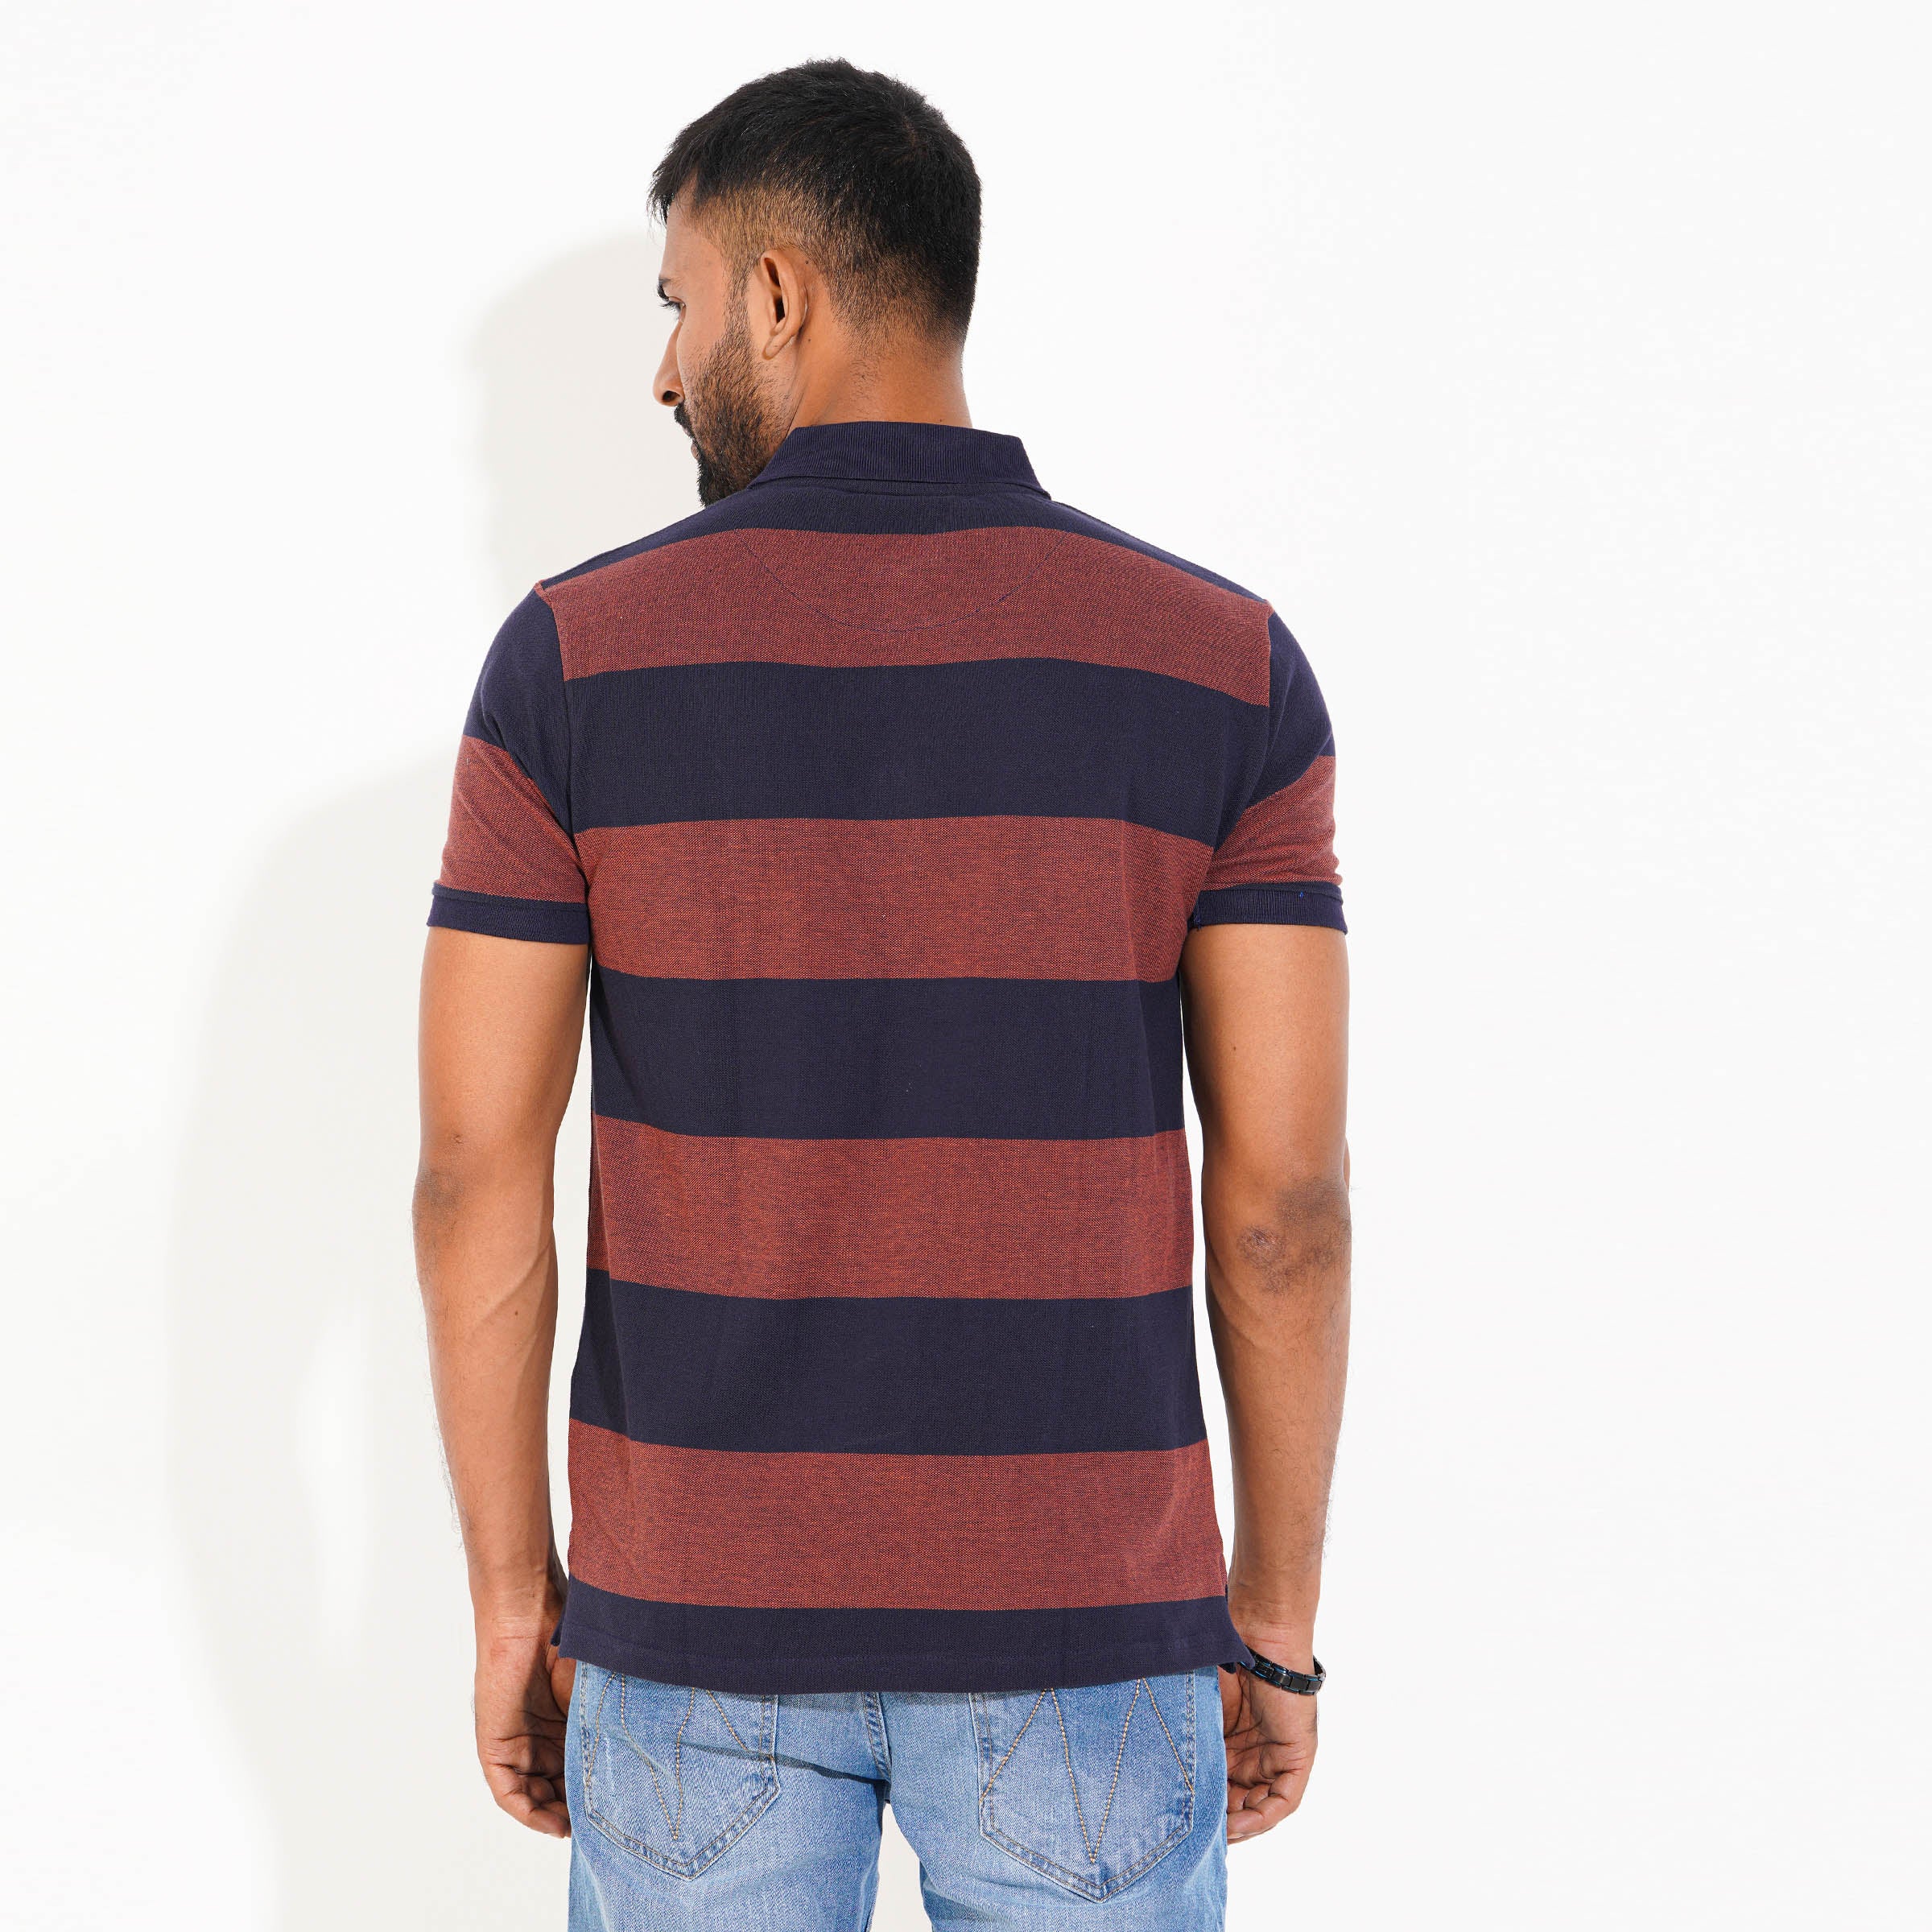 Stripe Polo Shirt - Coffee & Navy